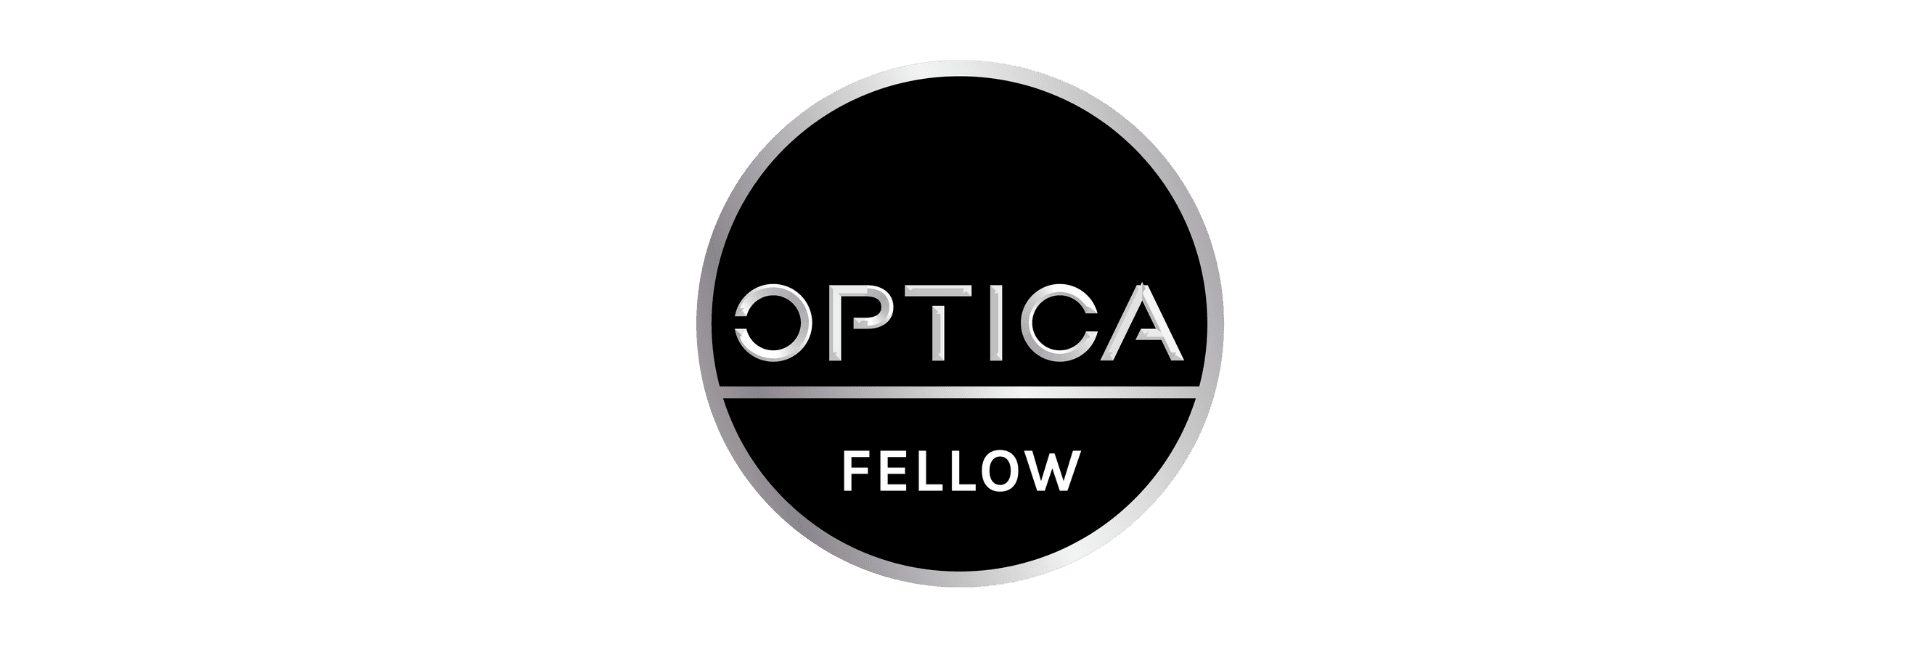 Optica Fellow Badge